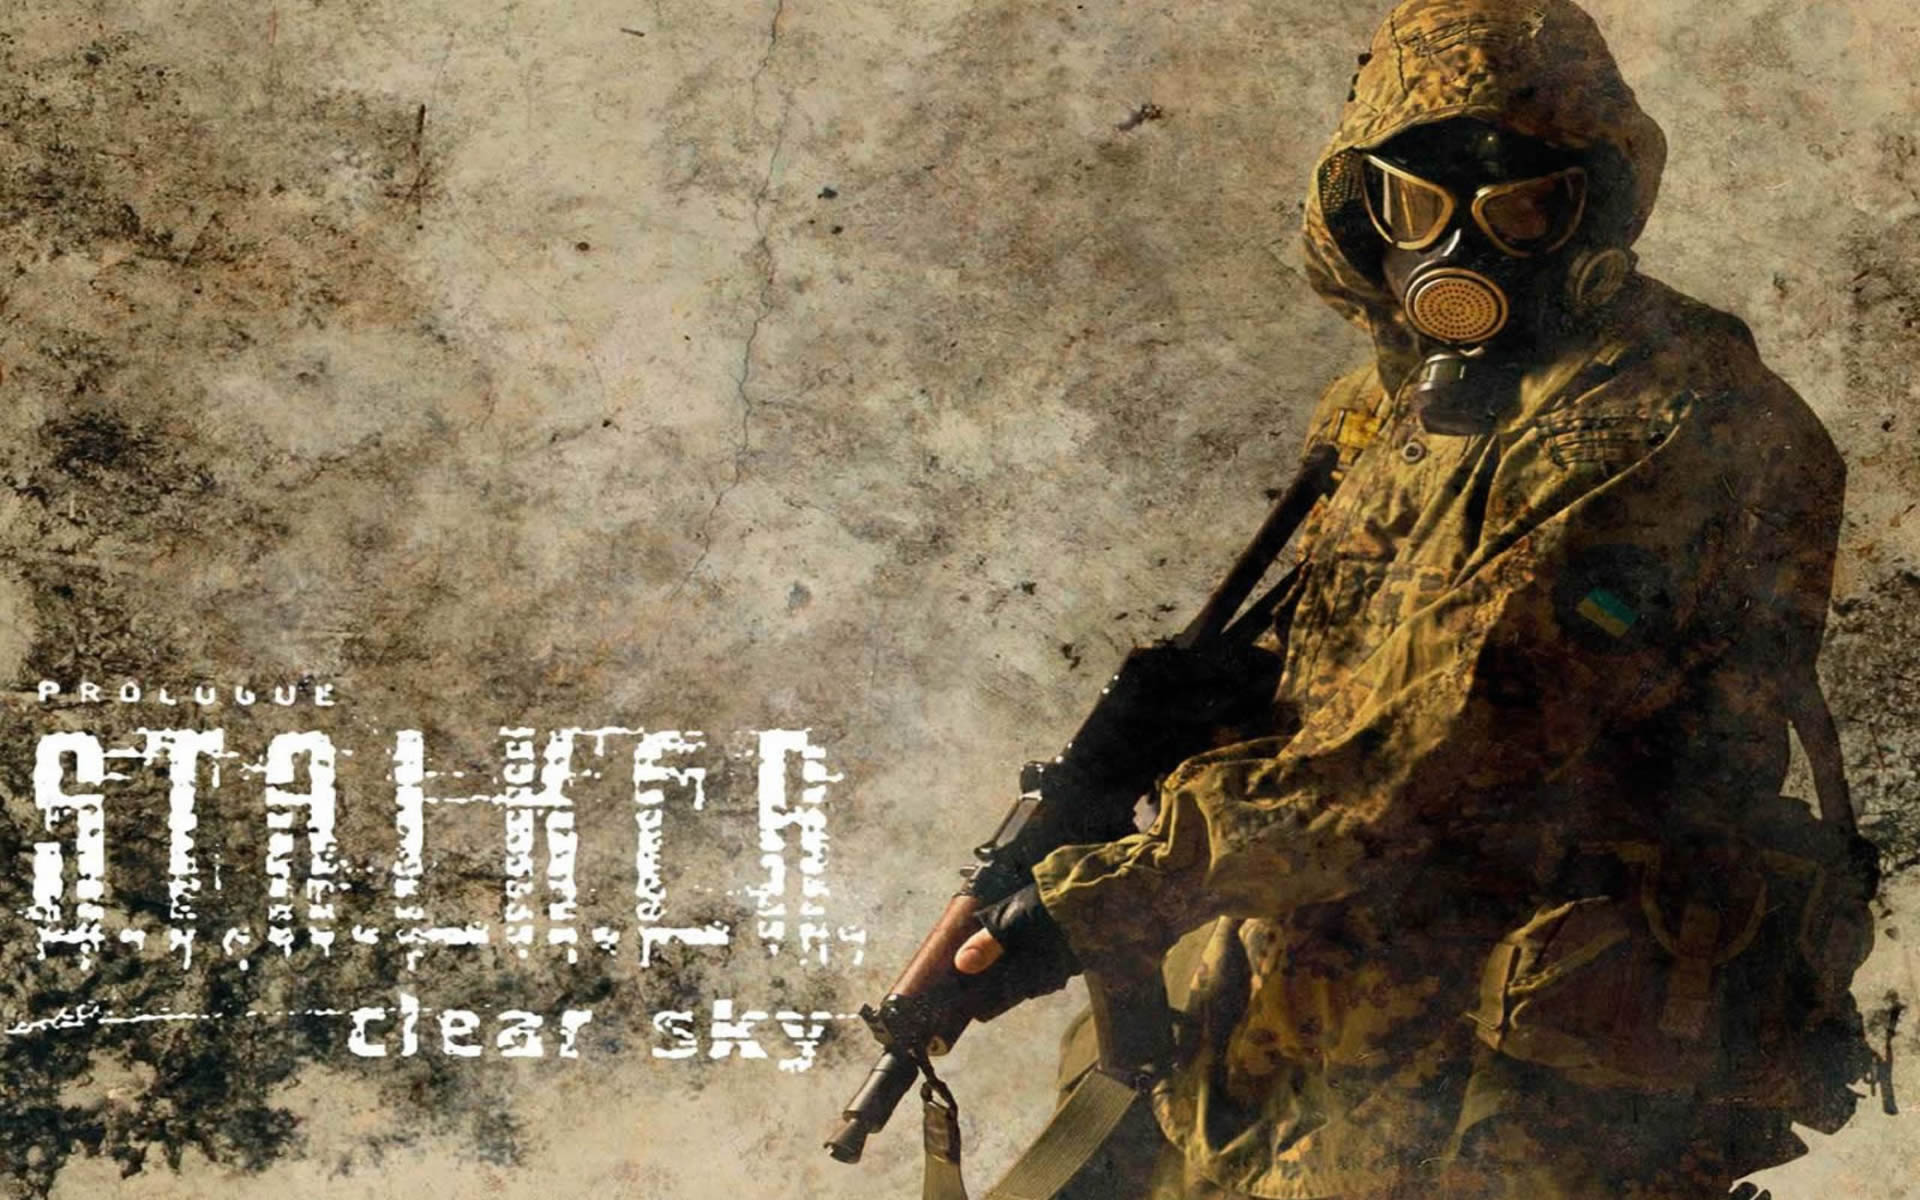 Gas Masked Stalker Action Rpg Games Wallpaper Image Featuring